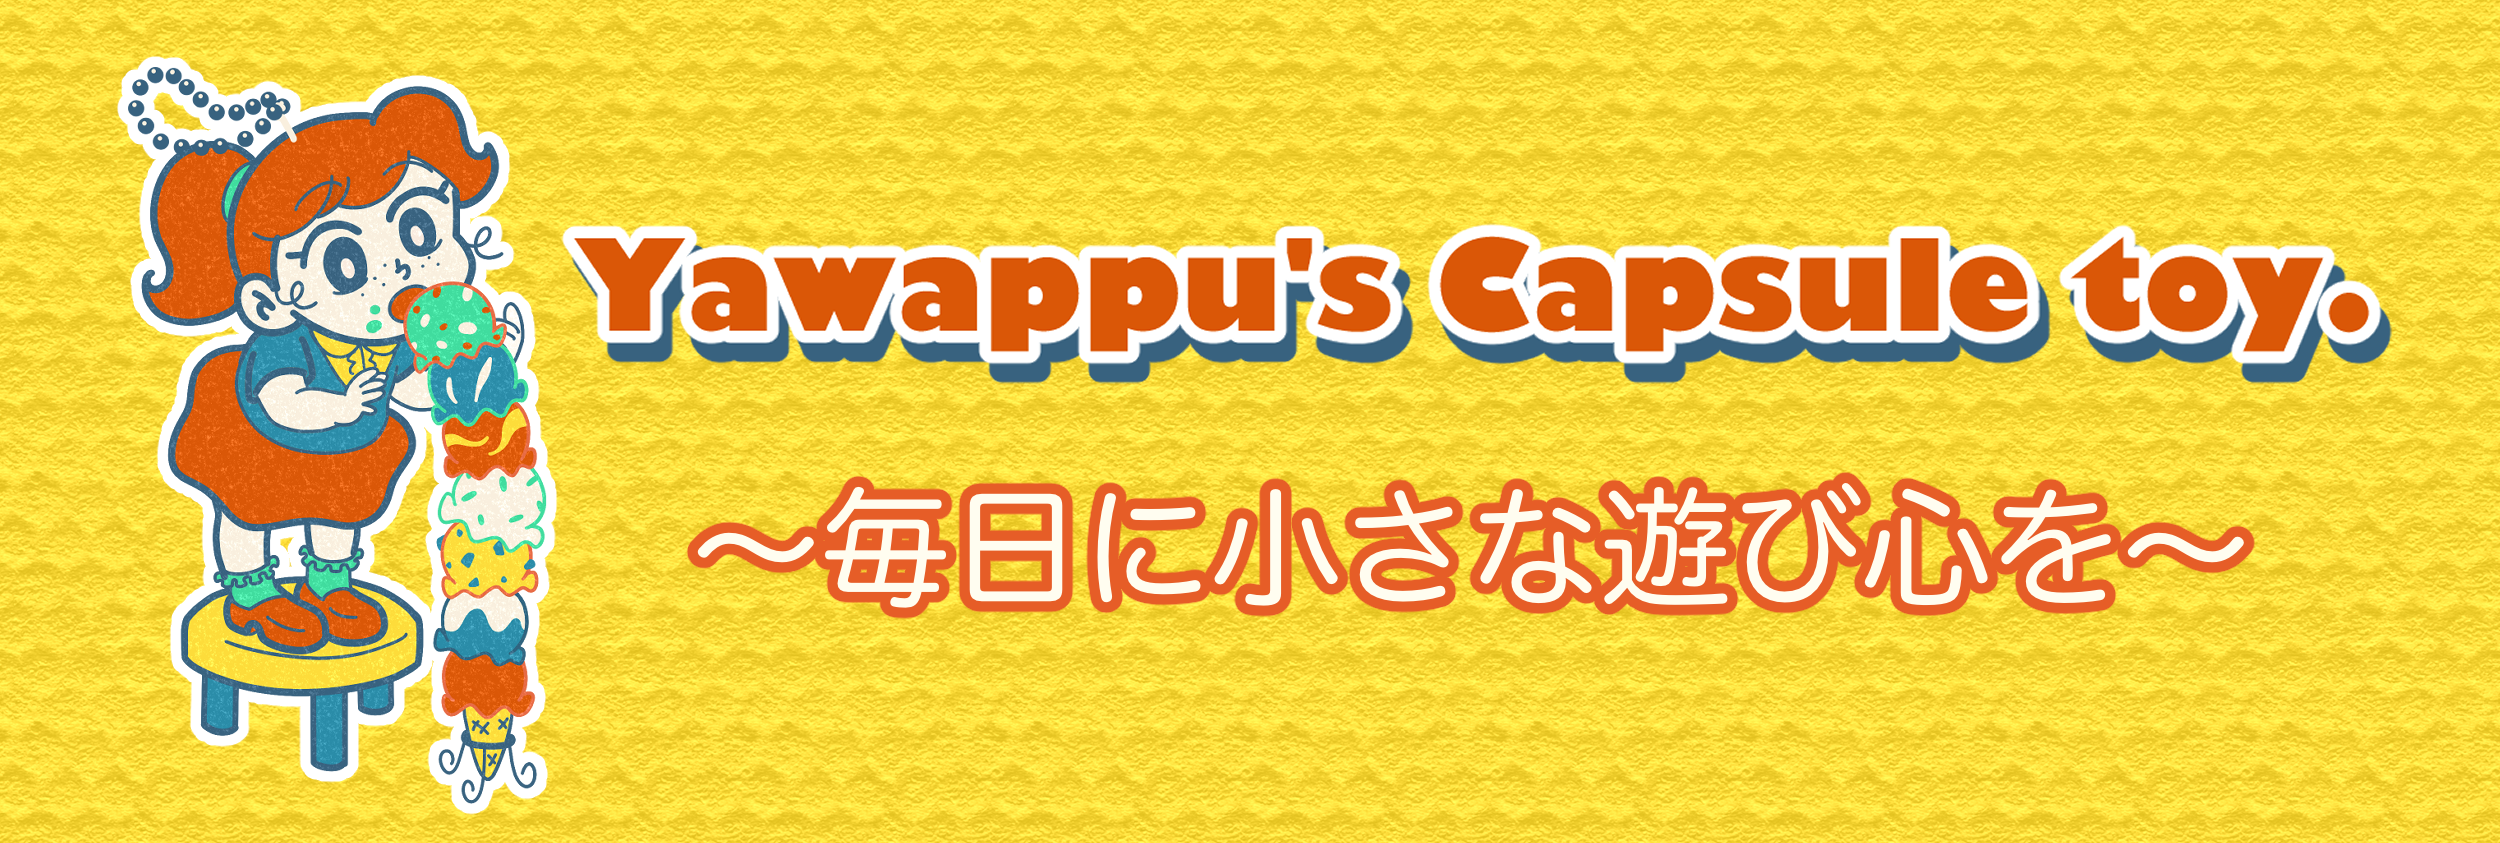 Yawappu's Capsule toy.